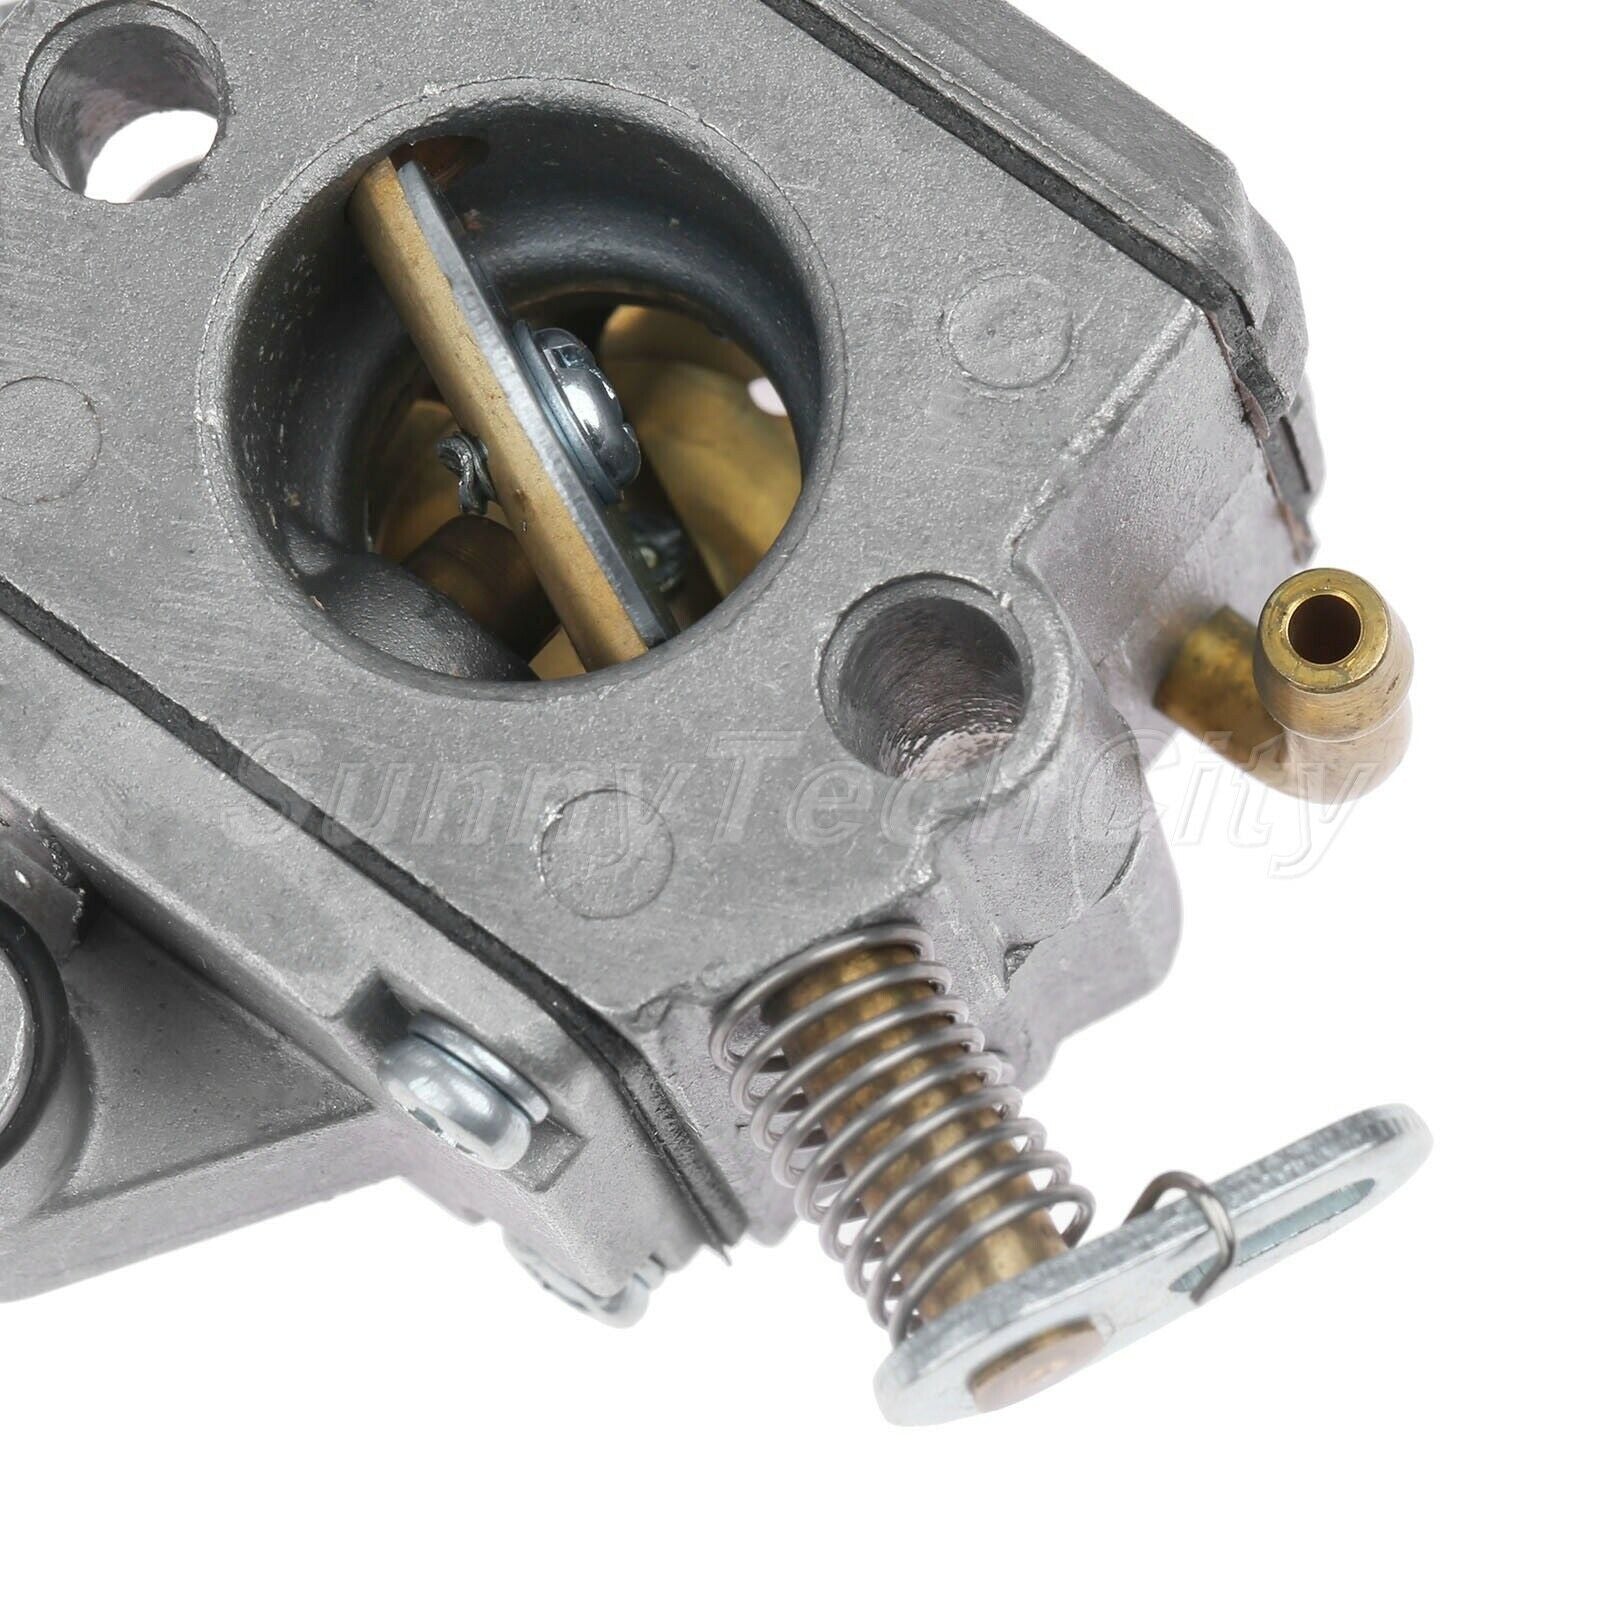 1 Set CARB Carburetor Rebuild Kit Chainsaw Parts For STIHL 017 018 MS170 MS180